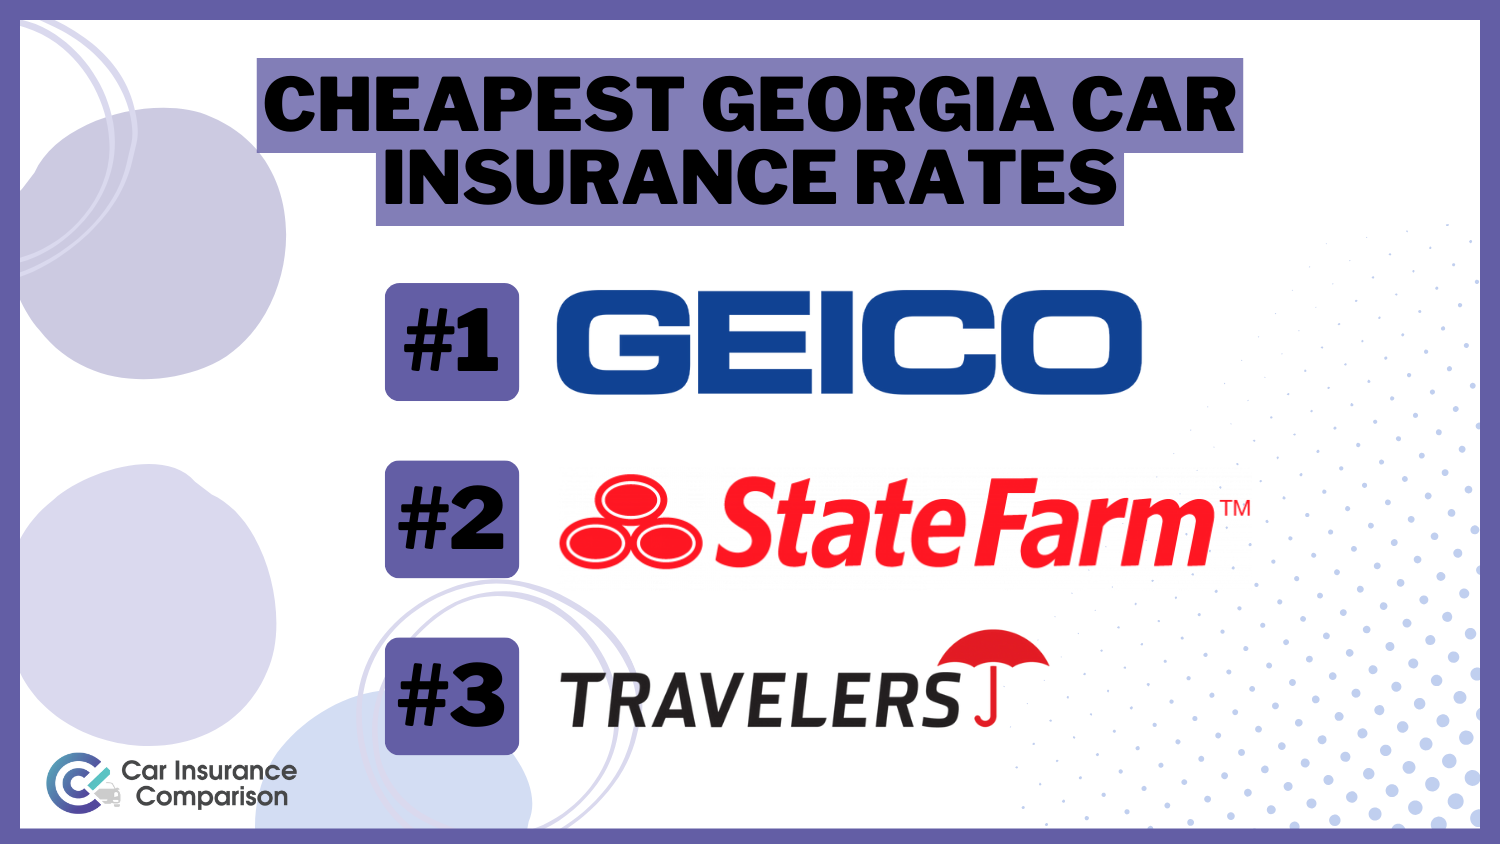 Cheapest Georgia Car Insurance Rates: Geico, State Farm, and Travelers